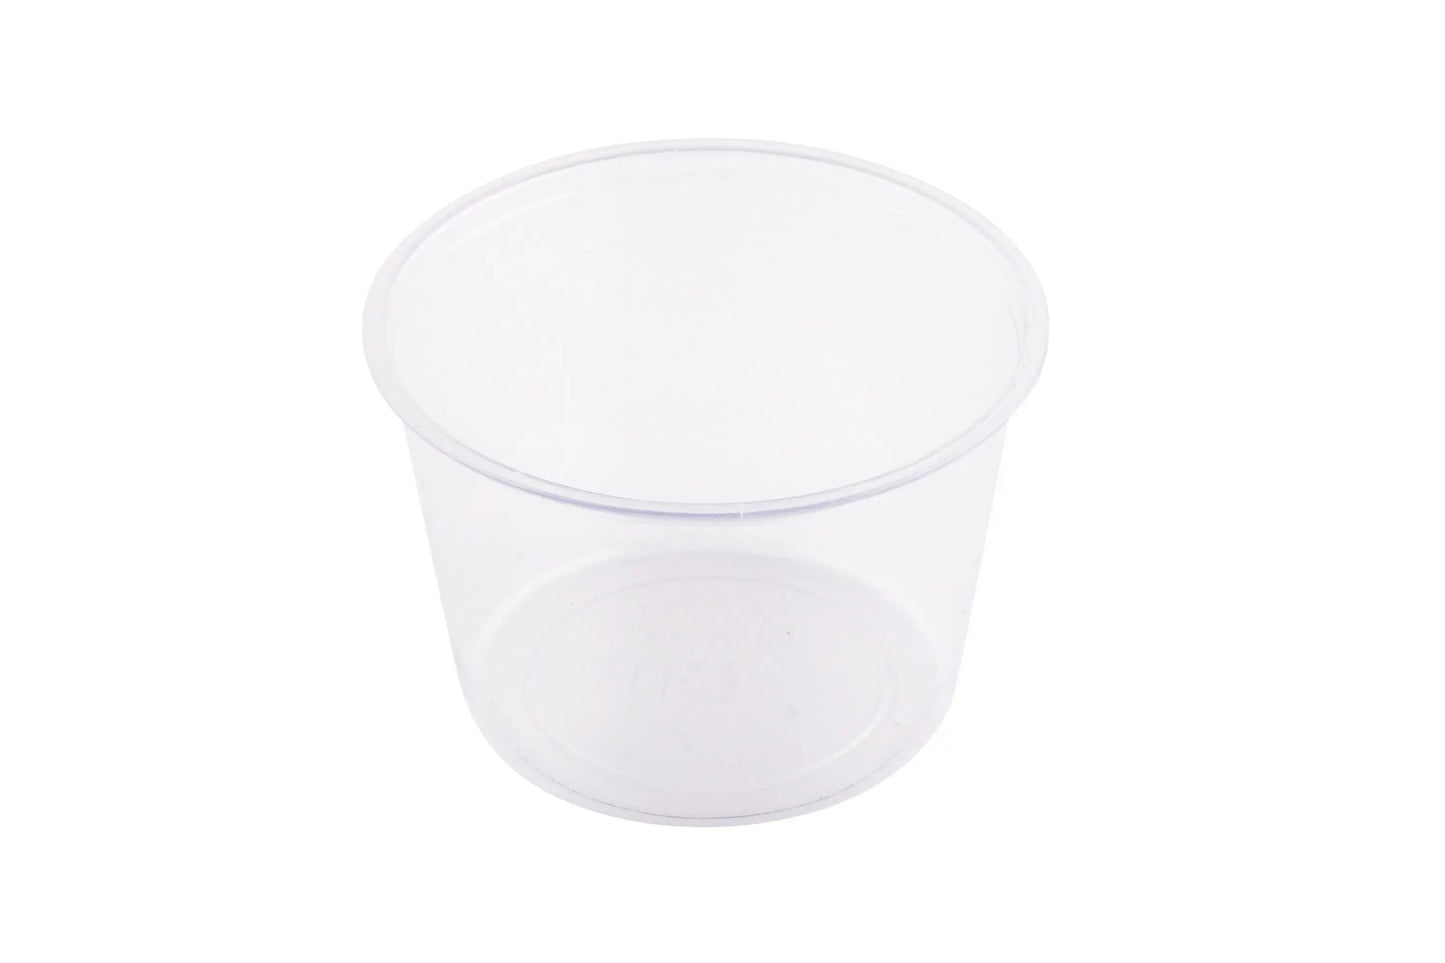 Basic Nature 4 oz Clear PLA Plastic Portion Cup - Compostable - 2 3/4" x 2 3/4" x 2" - 2000 count box